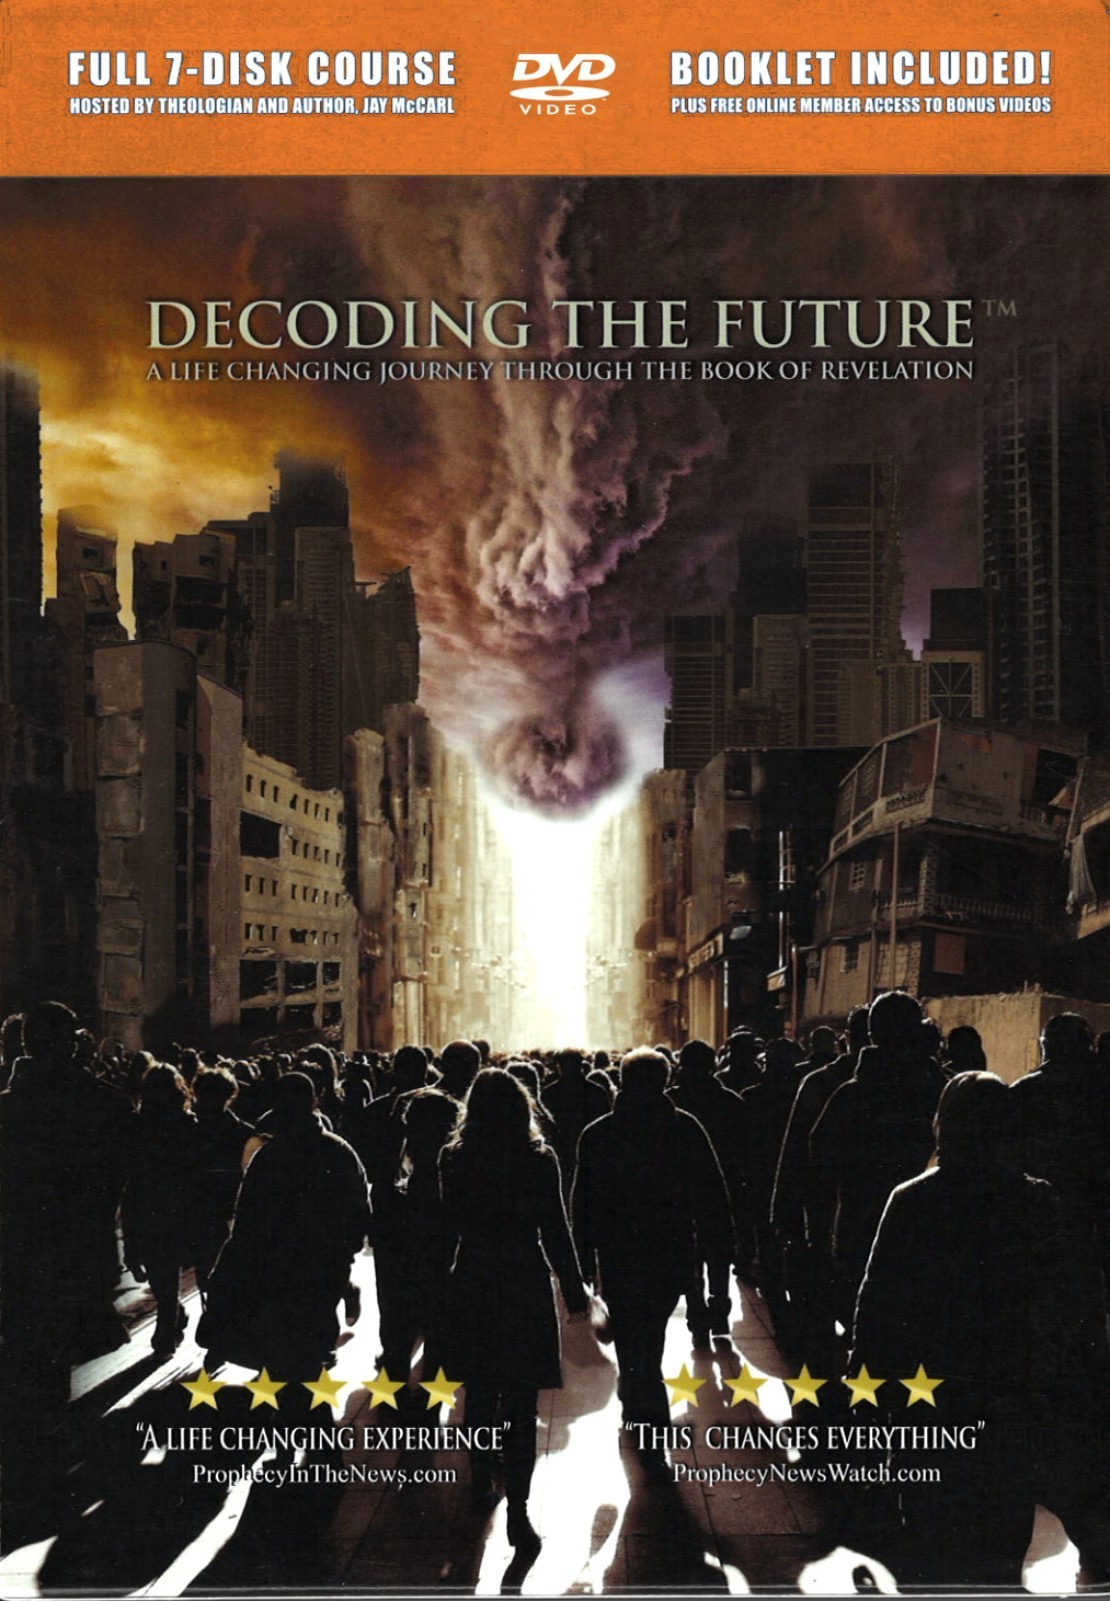 Decoding The Future - 7 DVD Course